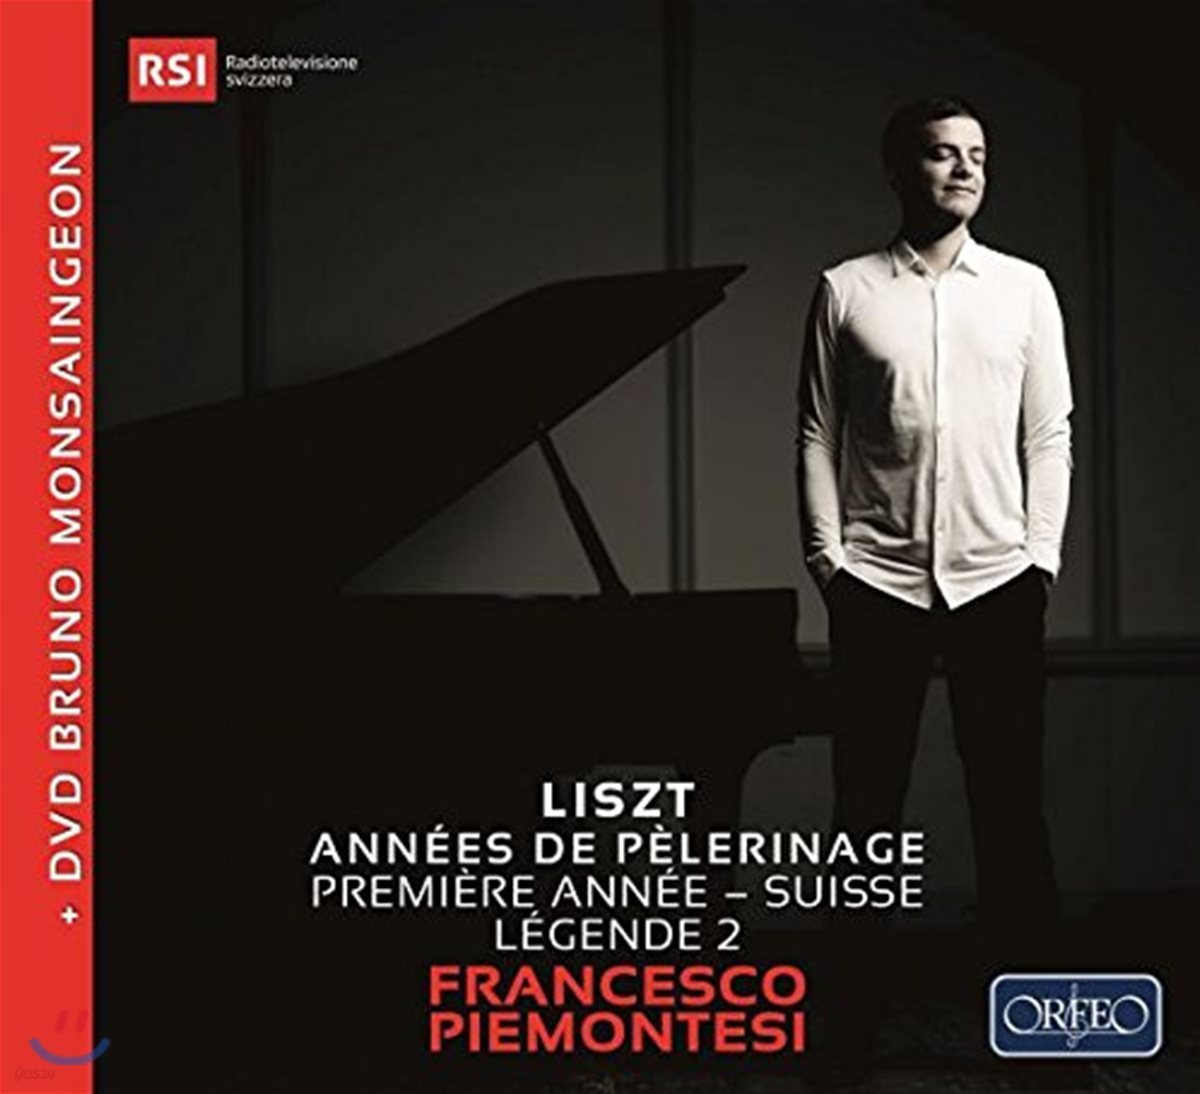 Francesco Piemontesi 리스트: 순례의 해 1년 '스위스' (Liszt: Annees de Pelerinage Premiere Annee - Suisse)